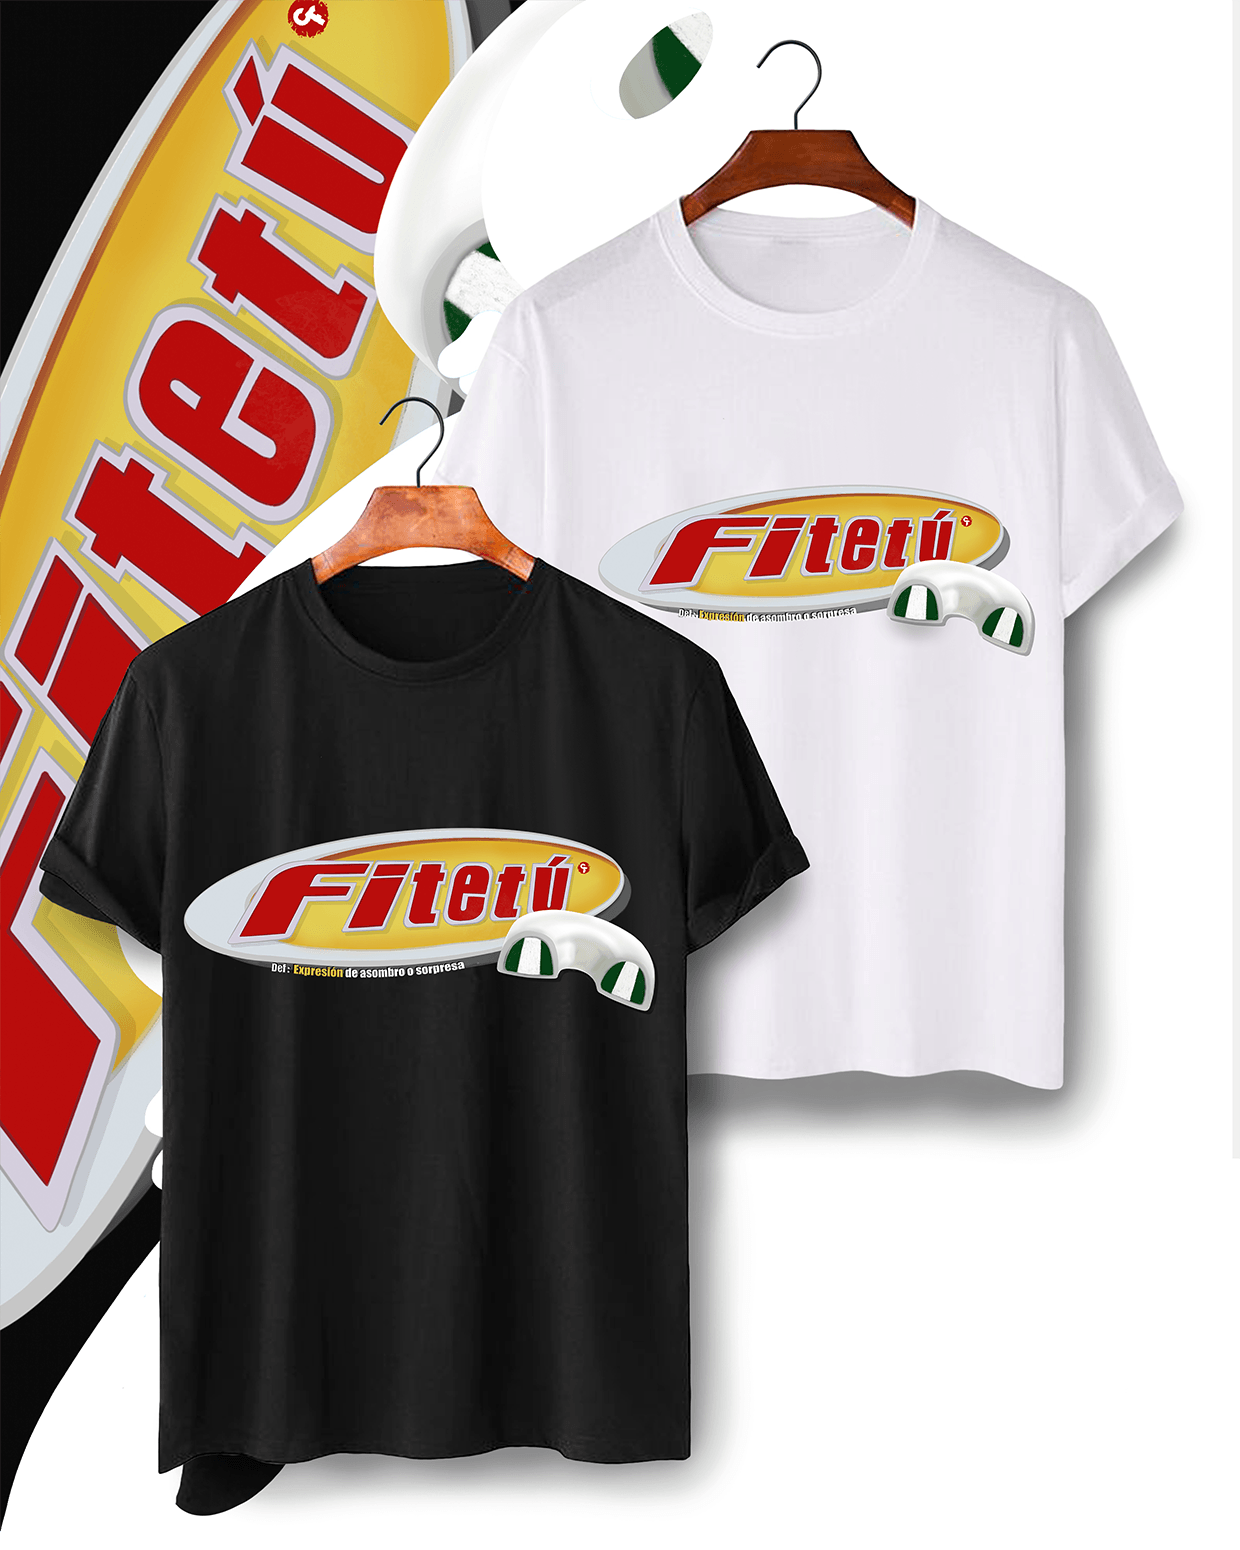 Camiseta de Cadiz con la palabra tipica Fitetu